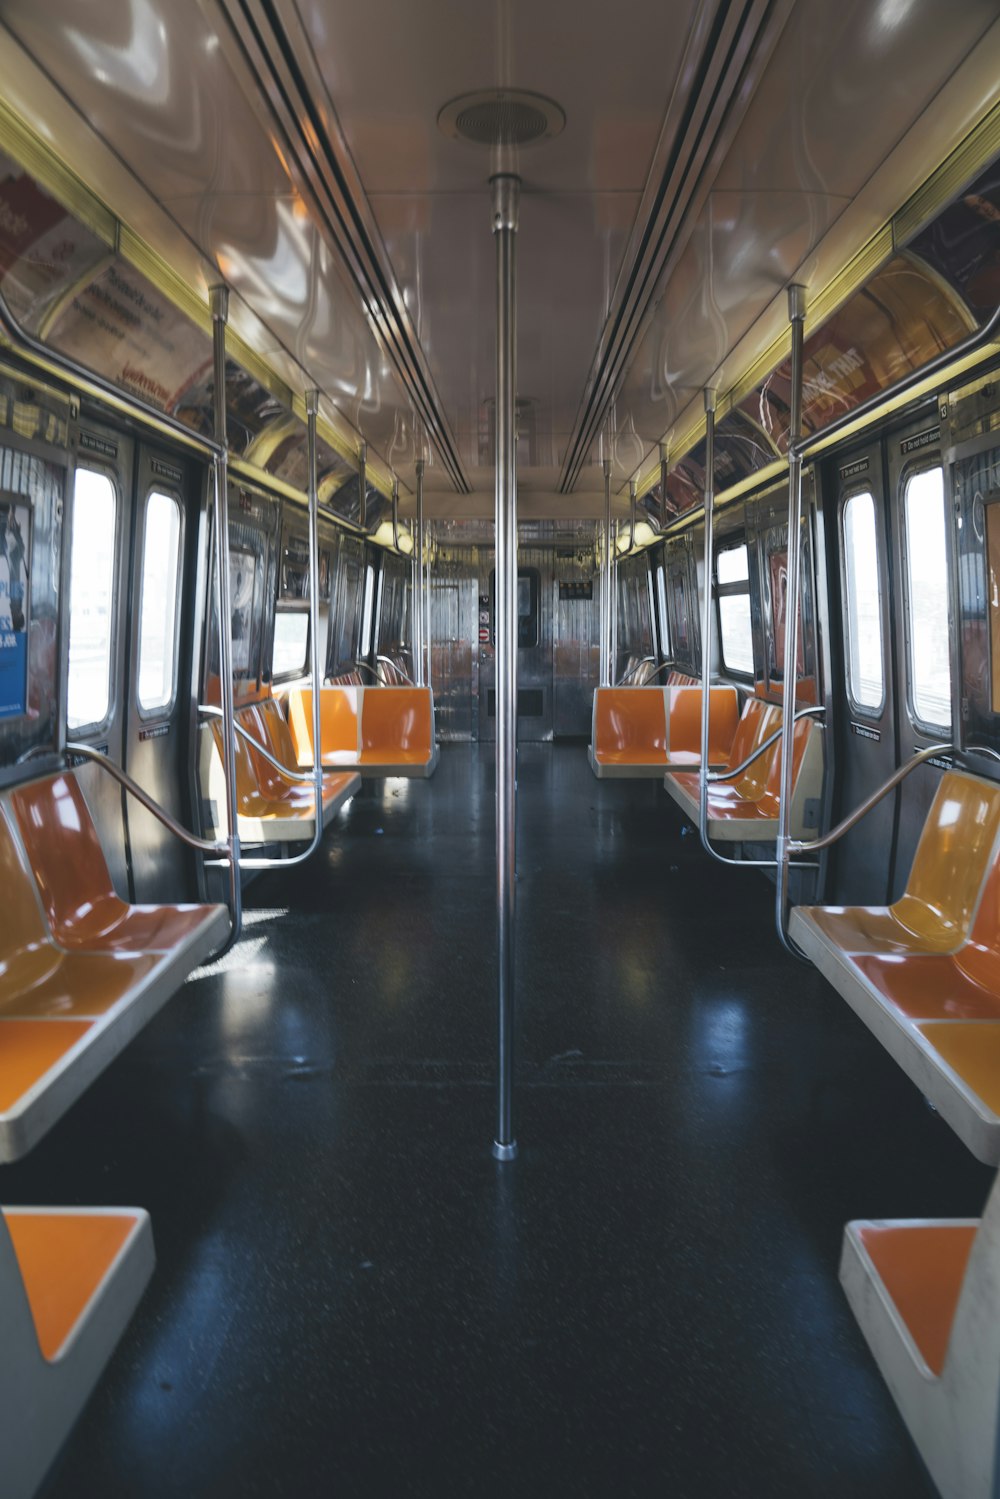 an empty train car with orange seats